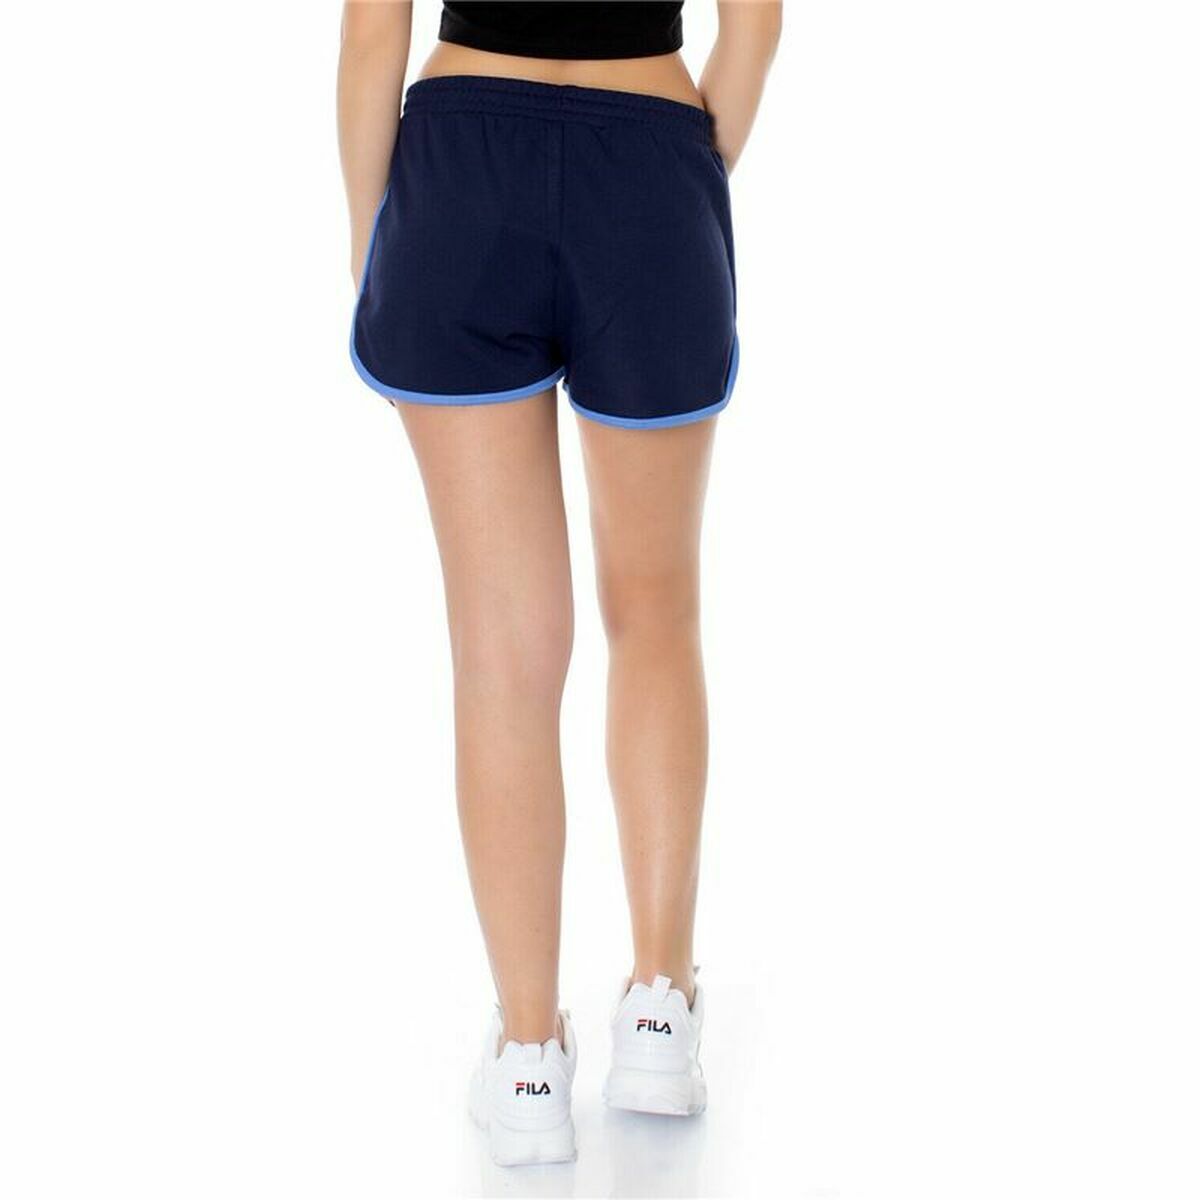 Sports Shorts for Women Fila Paige Dark blue